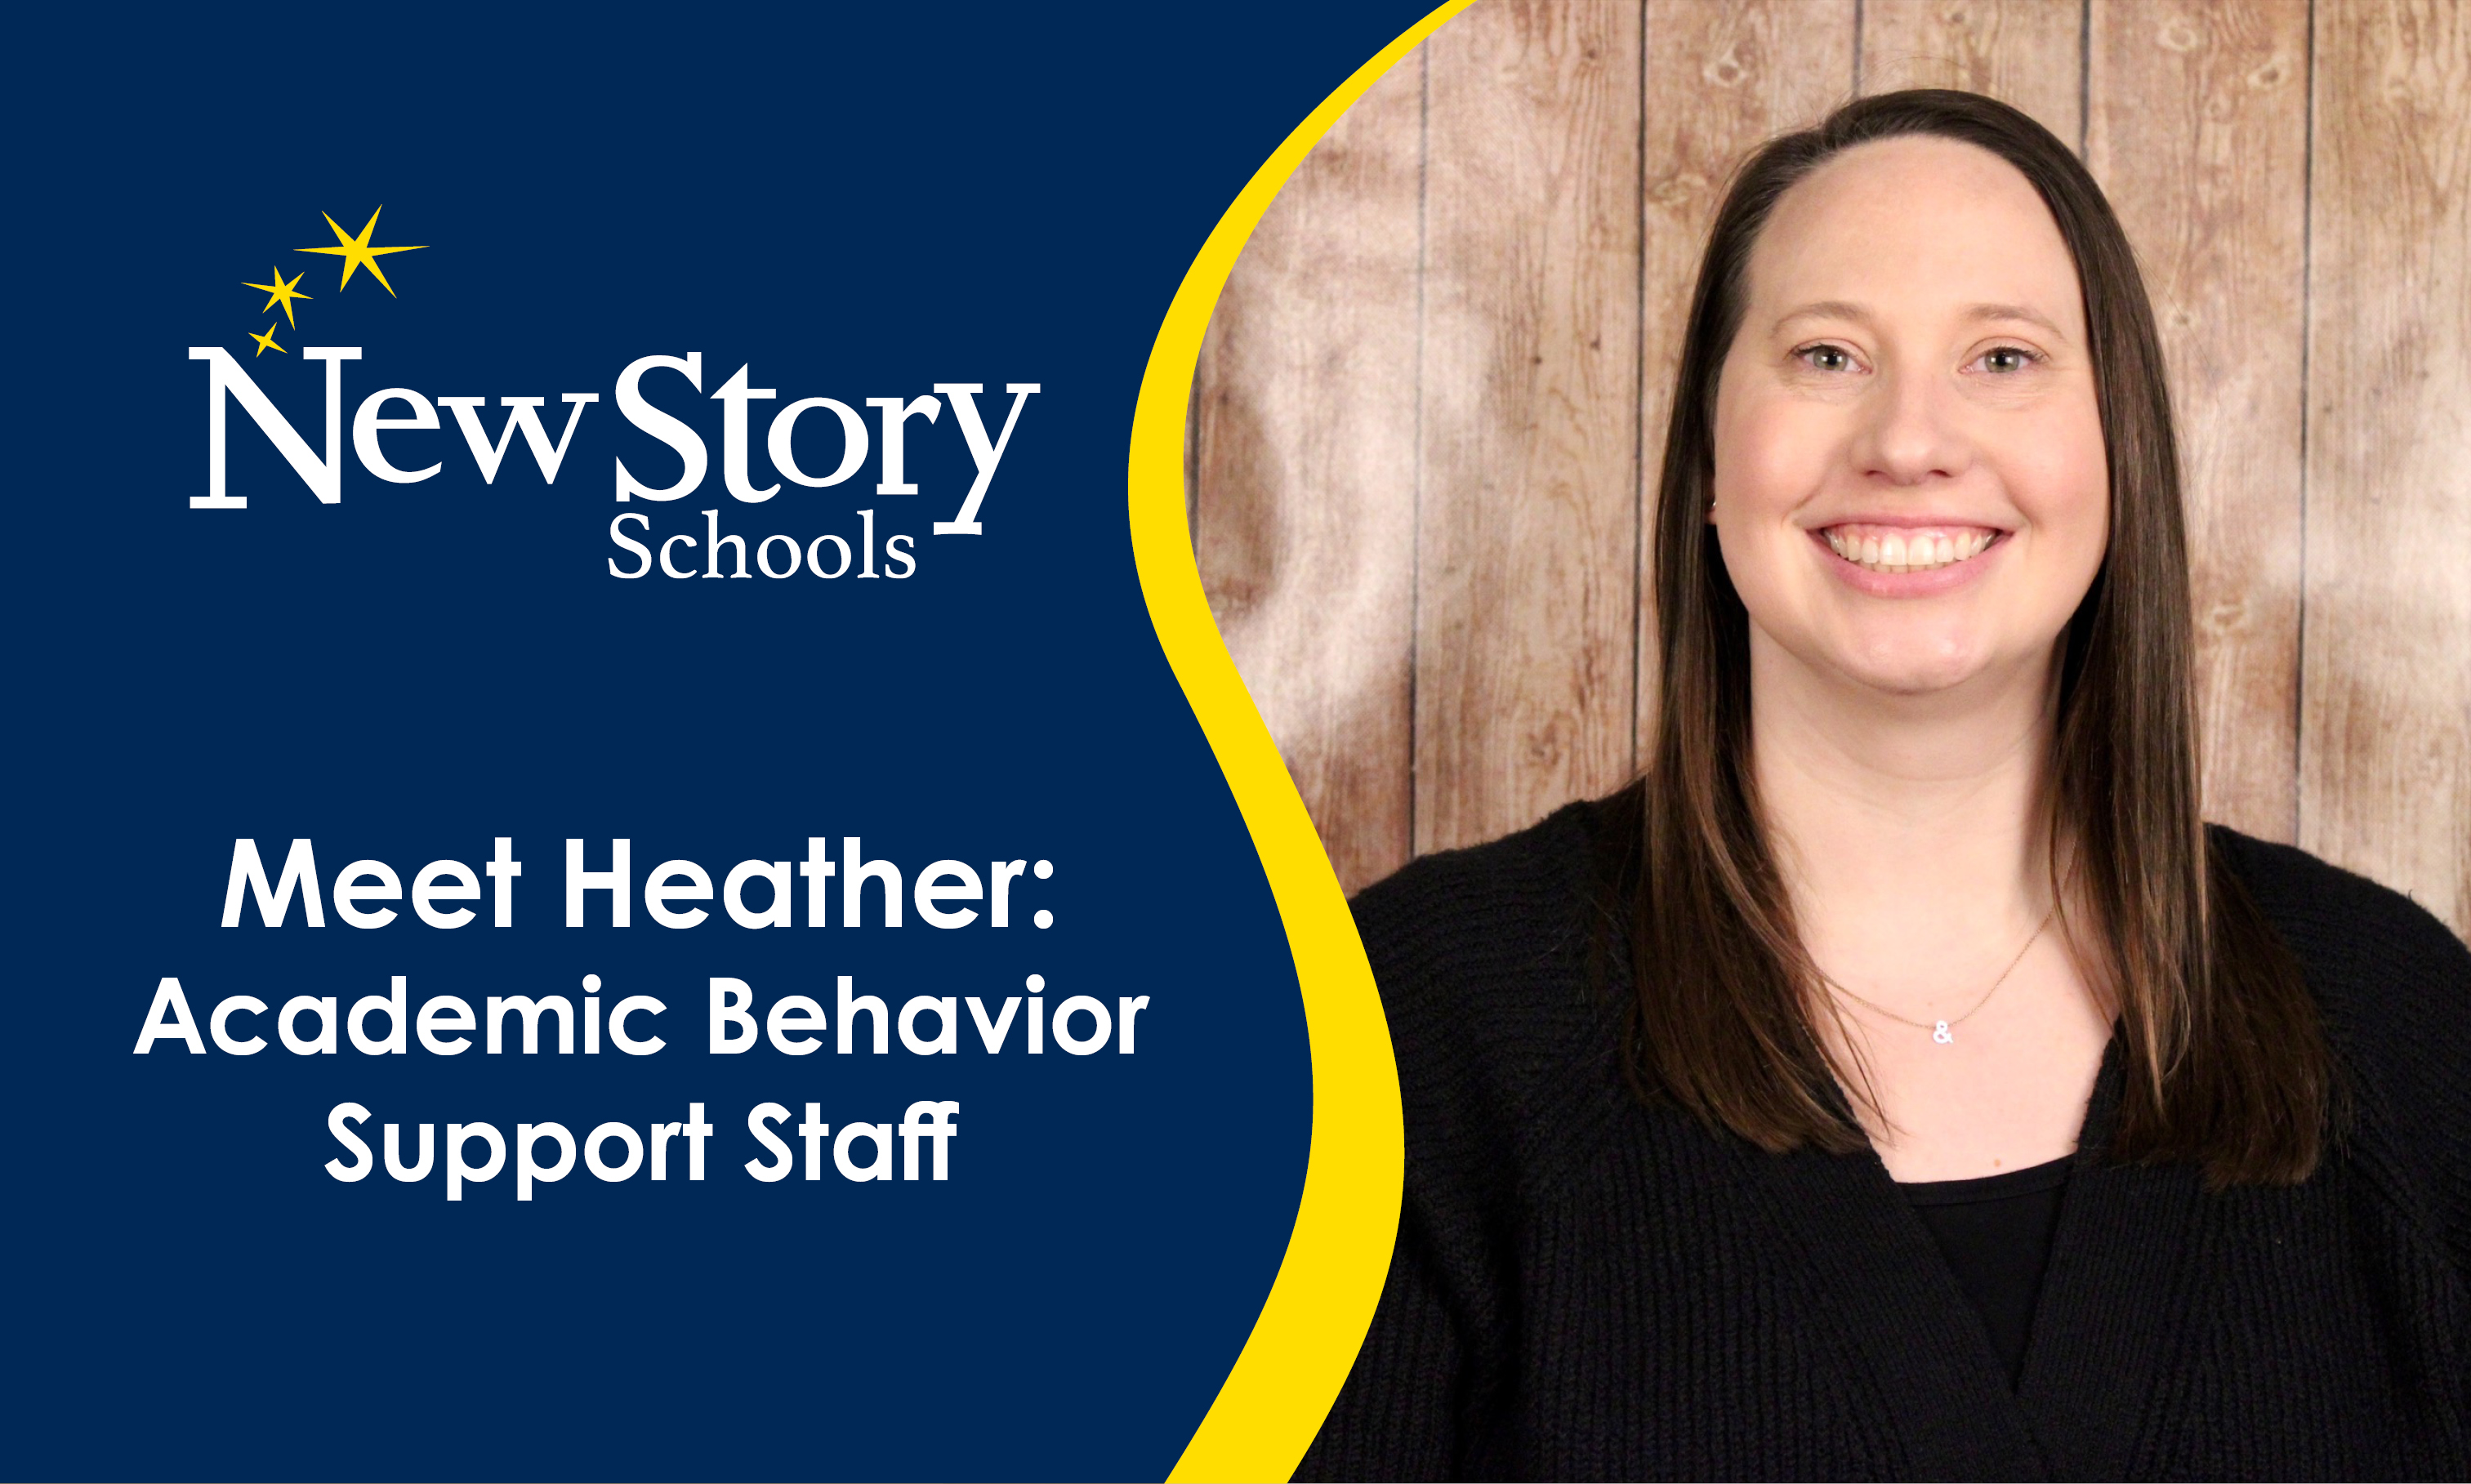 Meet Heather: Academic Behavior Support Staff